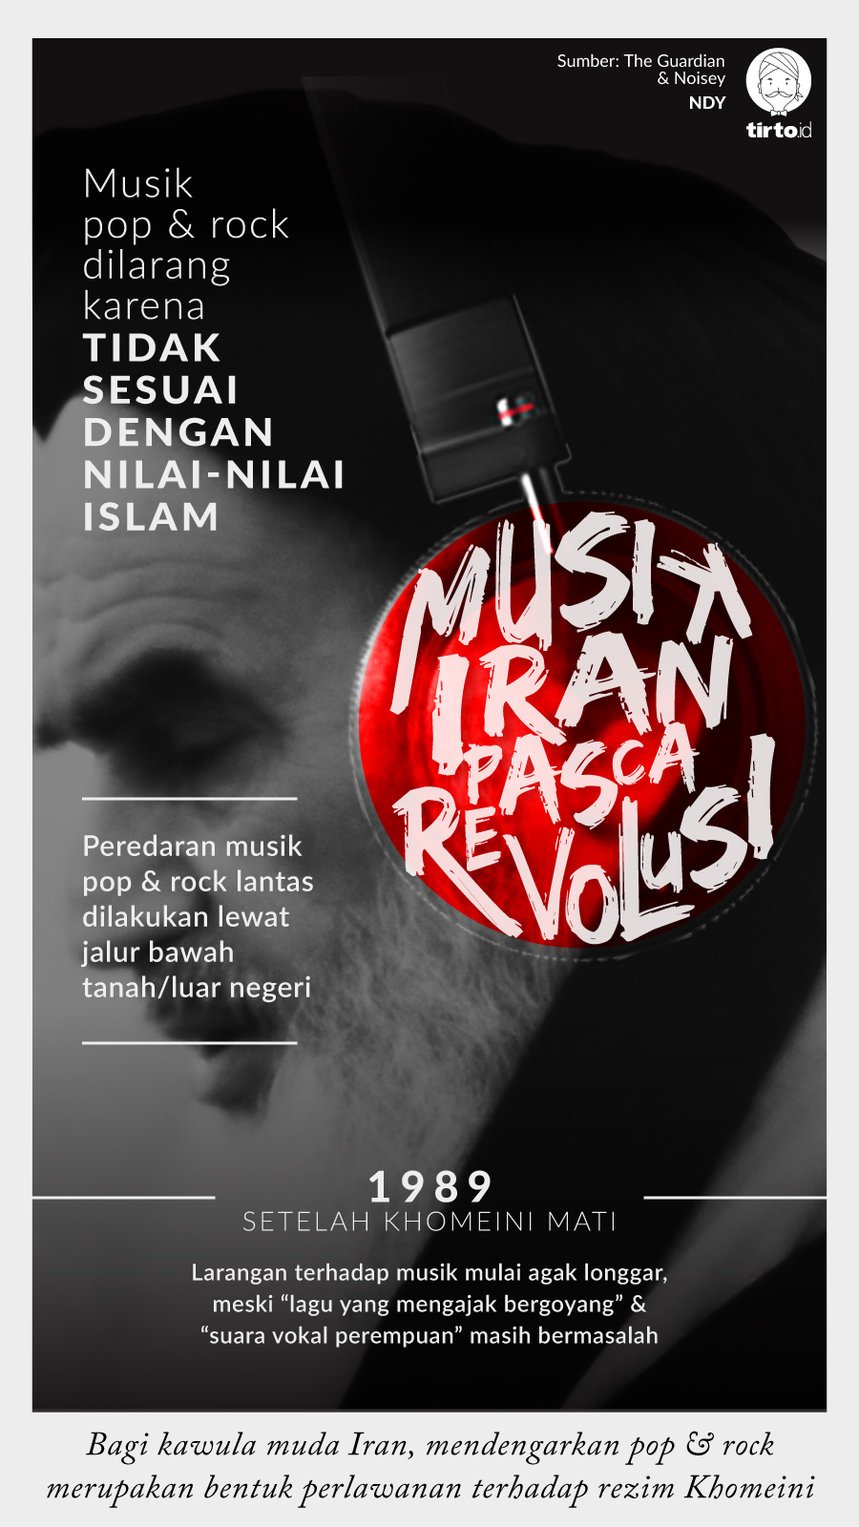 Infografik Musik Iran pasca revolusi